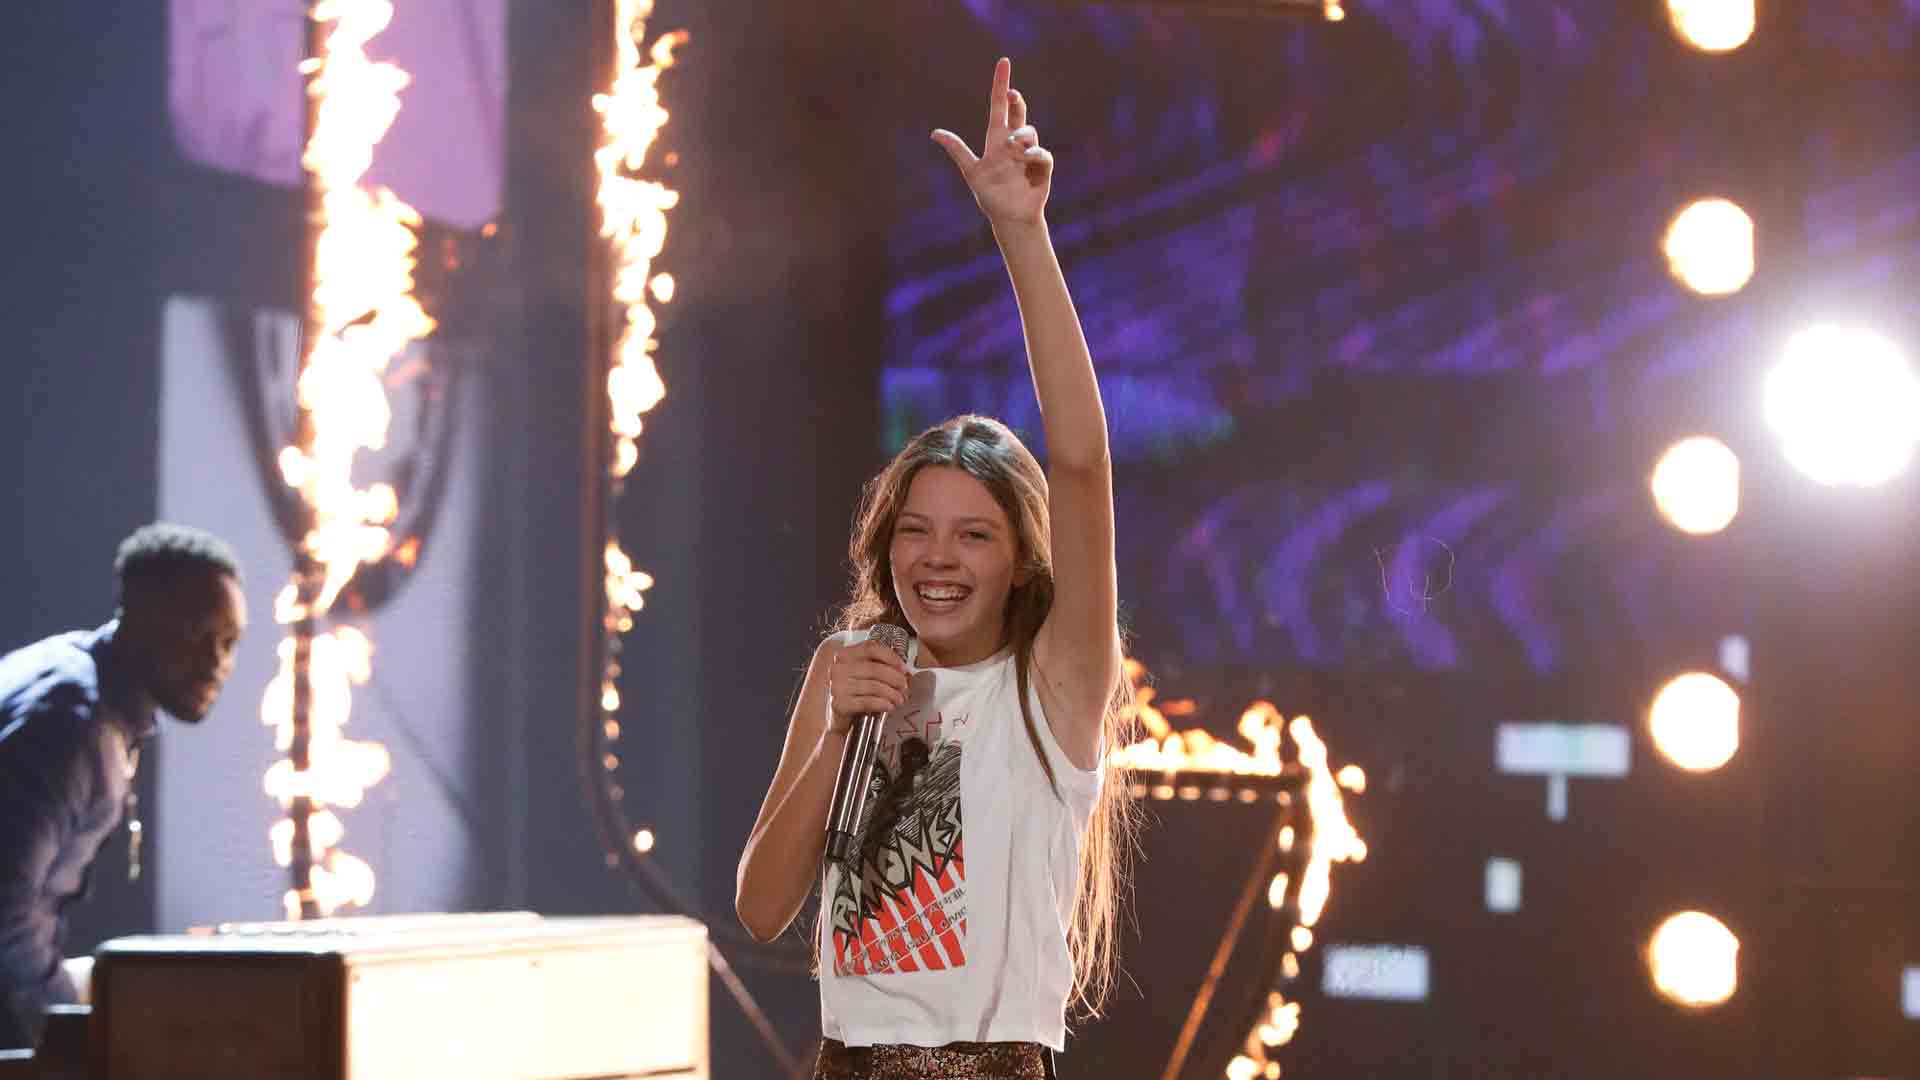 Watch America's Got Talent Highlight: Courtney Hadwin - The Live Show Finals - NBC.com